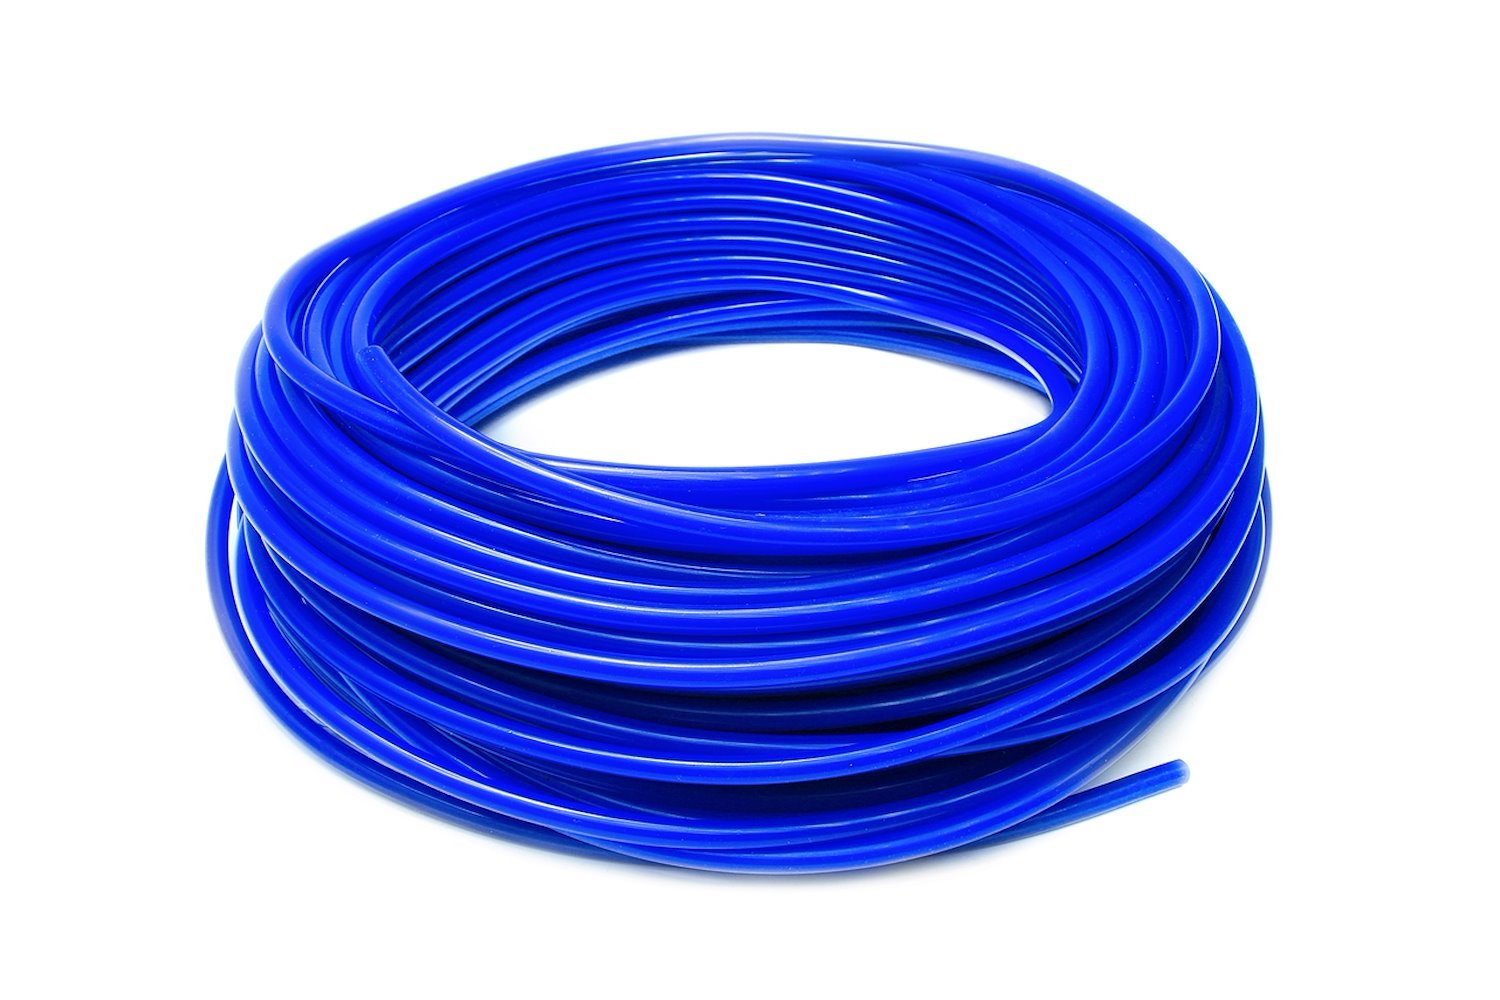 HTSVH5-BLUEx50 High-Temperature Silicone Vacuum Hose Tubing, 13/64 in. ID, 50 ft. Roll, Blue